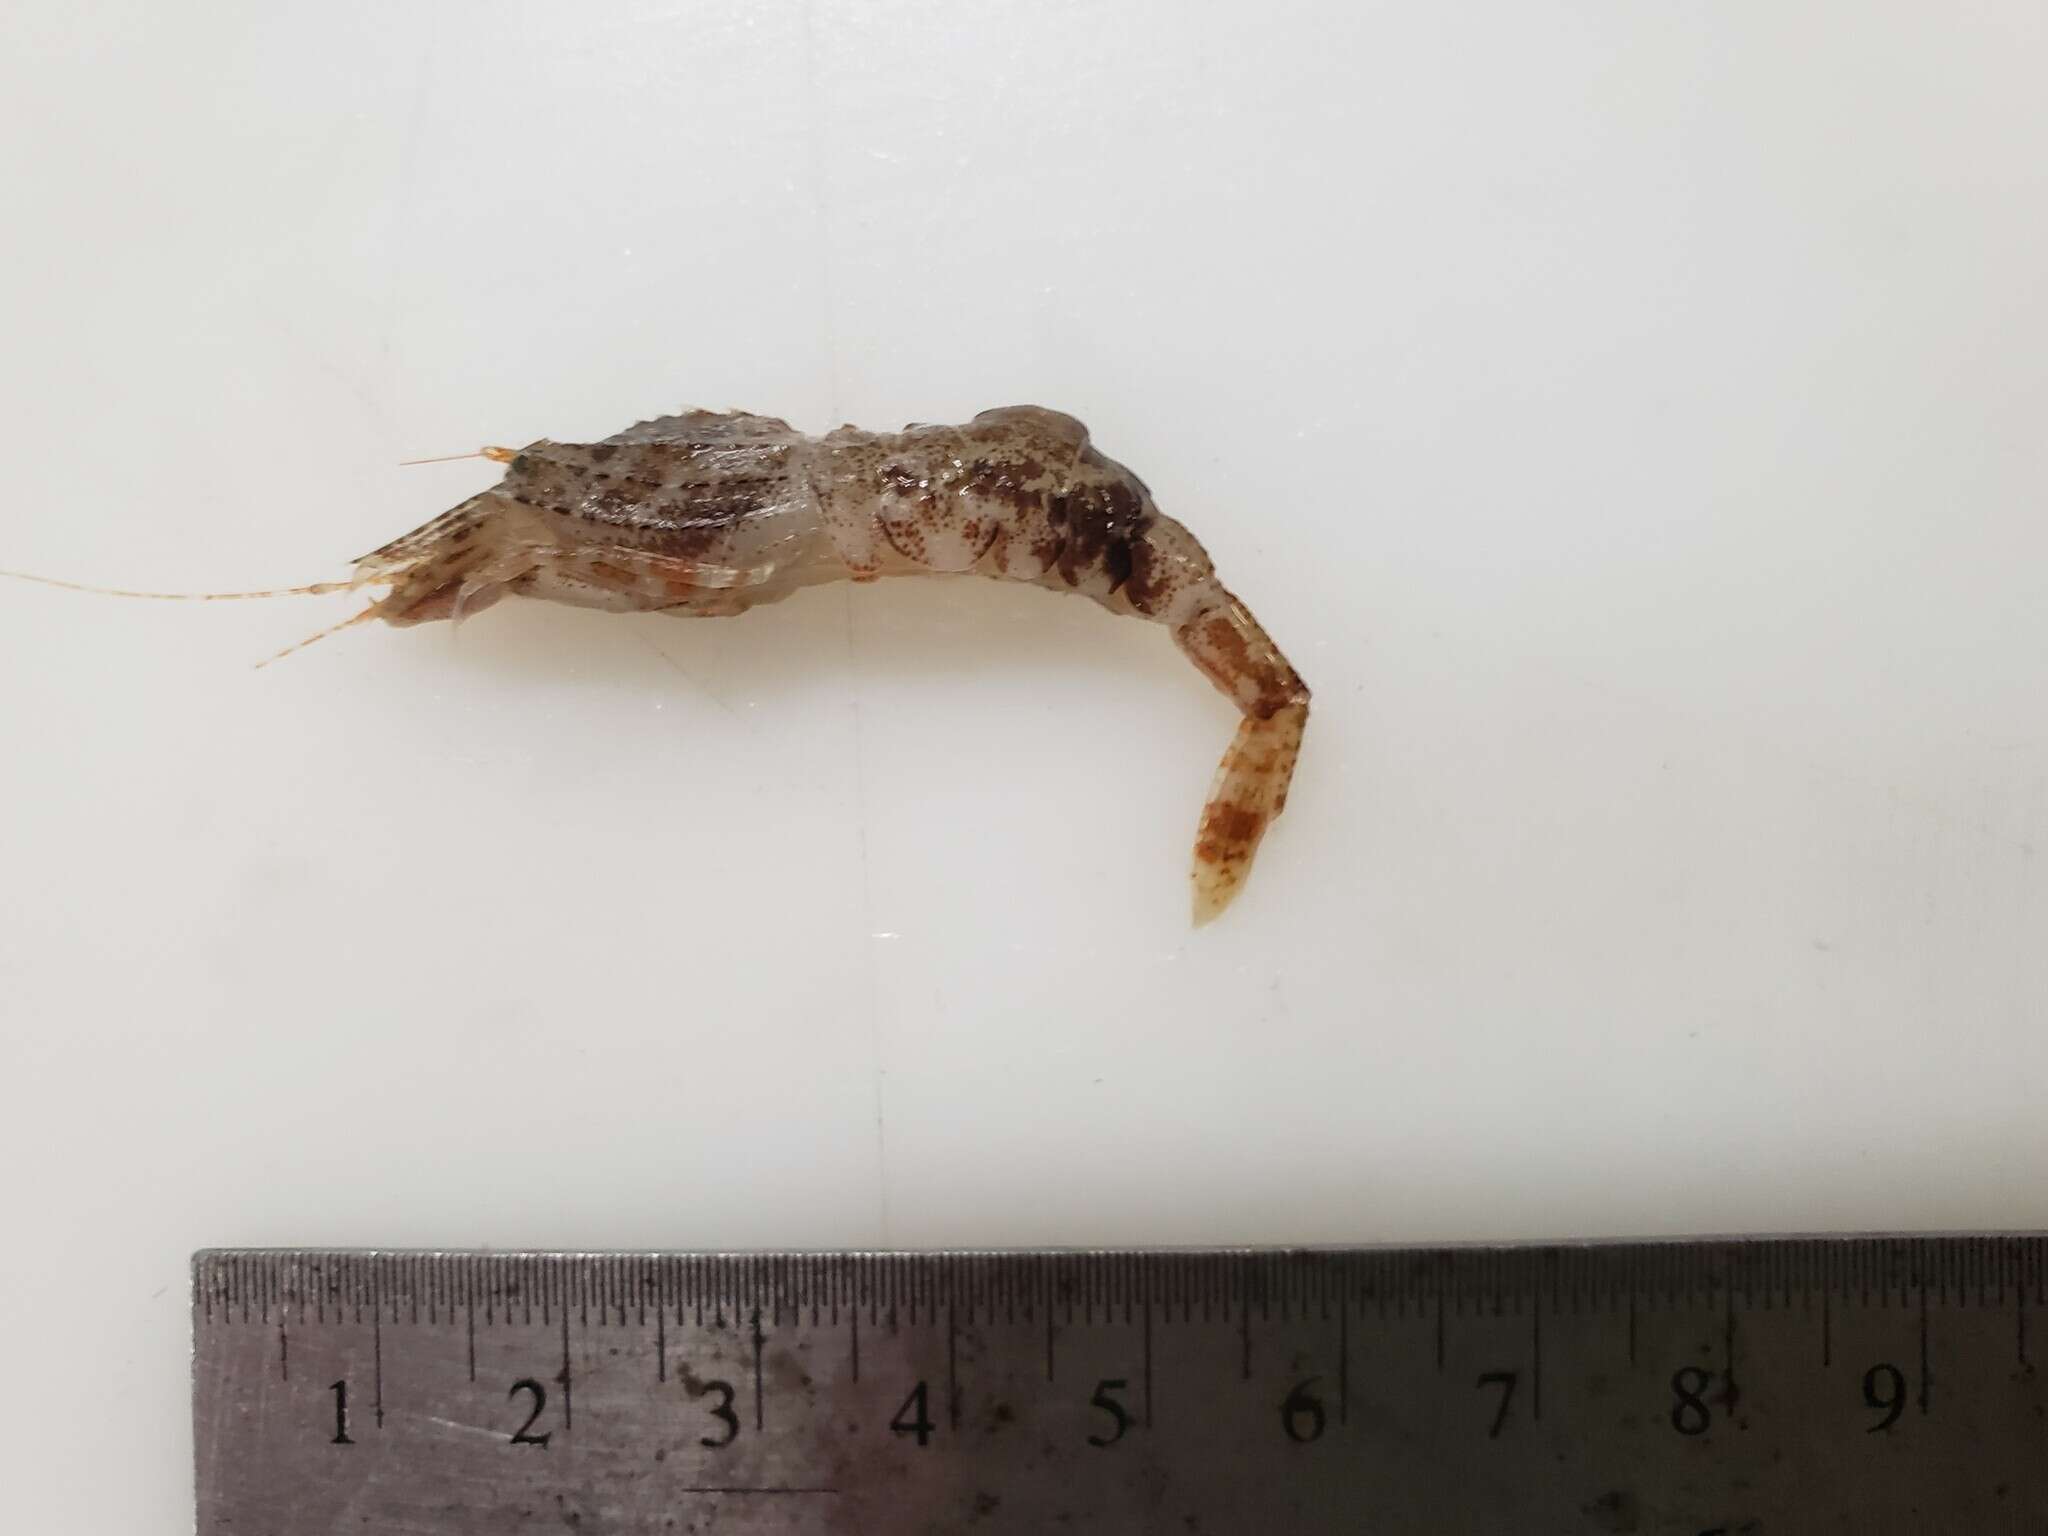 Image of Sars shrimp